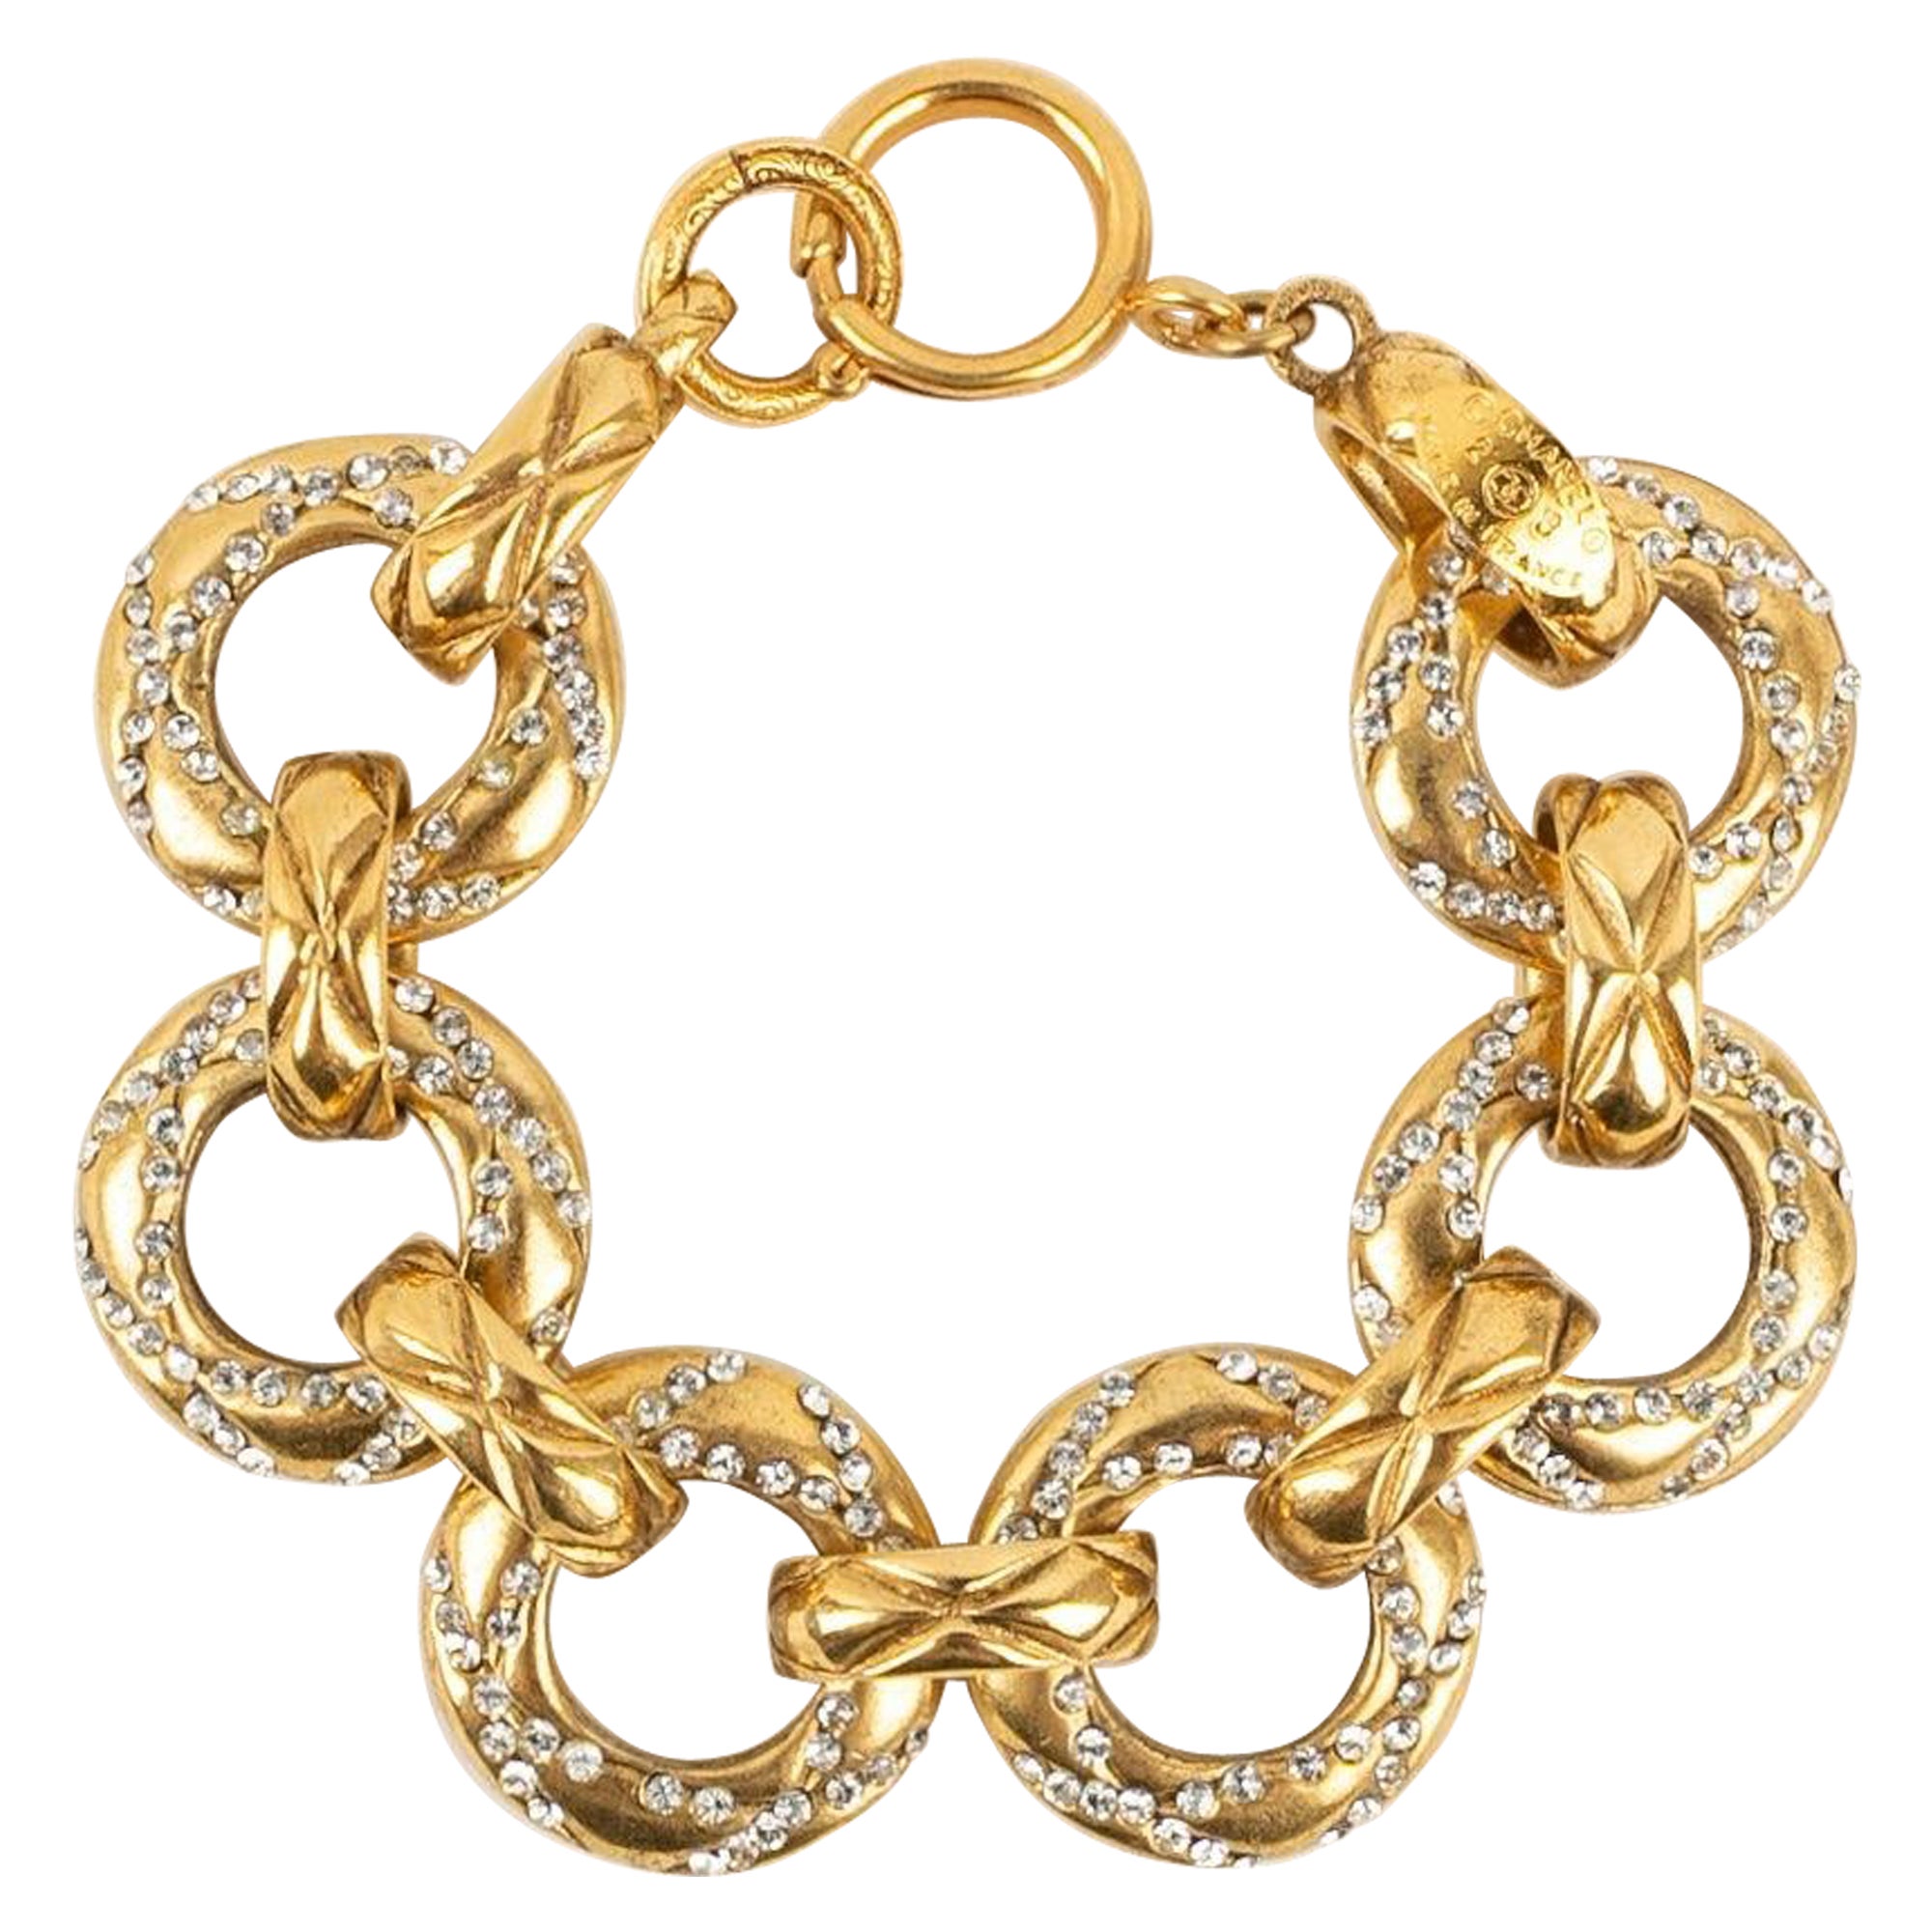 Chanel Golden Bracelet in Golden Metal with Swarovski Rhinestones, 2003 For Sale